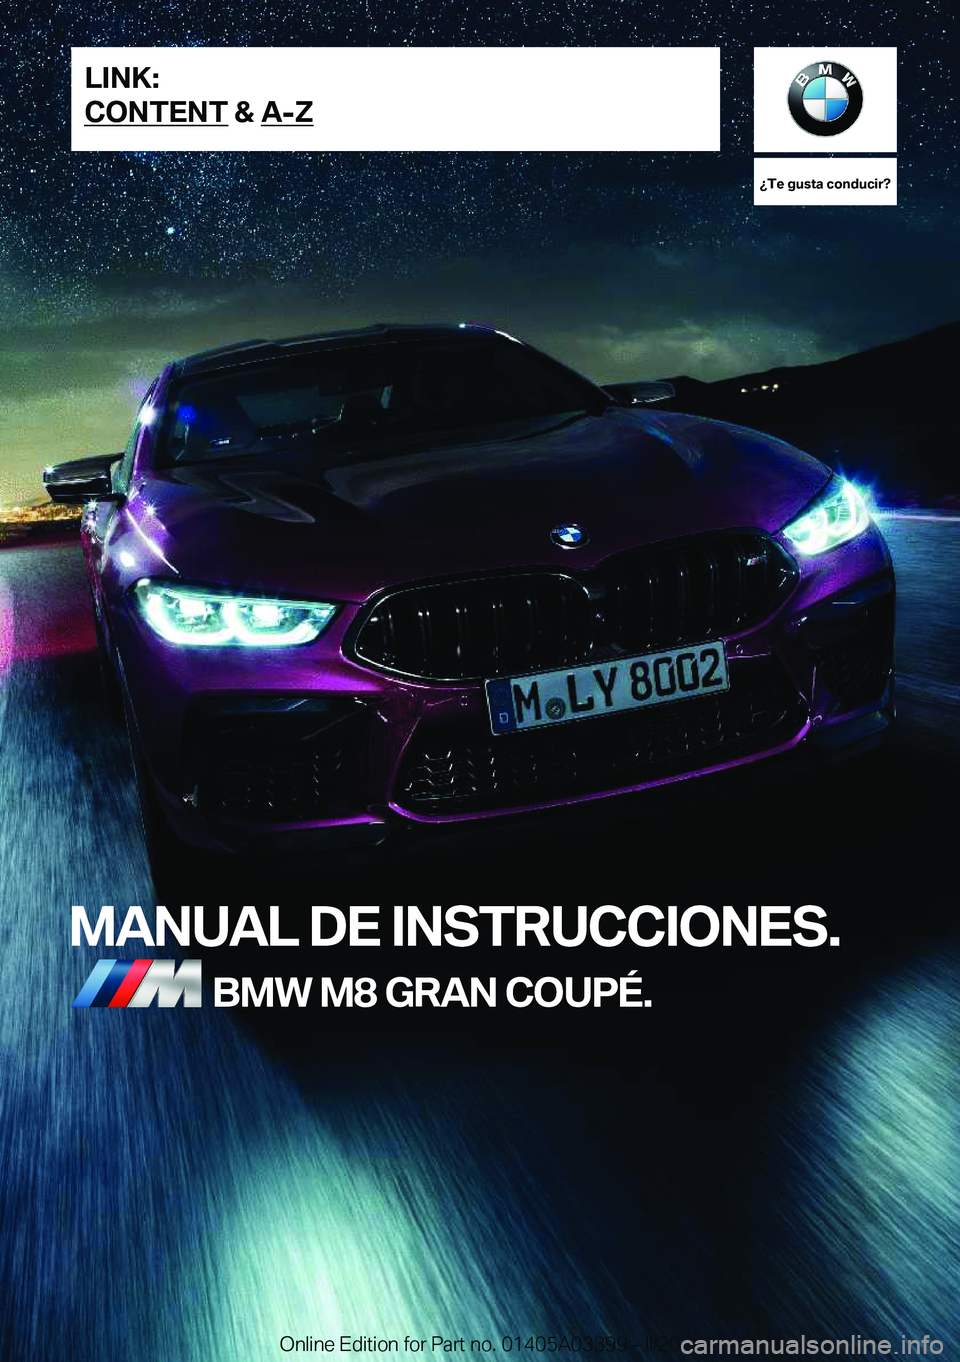 BMW M8 GRAN COUPE 2020  Manuales de Empleo (in Spanish) ��T�e��g�u�s�t�a��c�o�n�d�u�c�i�r� 
�M�A�N�U�A�L��D�E��I�N�S�T�R�U�C�C�I�O�N�E�S�.�B�M�W��M�8��G�R�A�N��C�O�U�P�